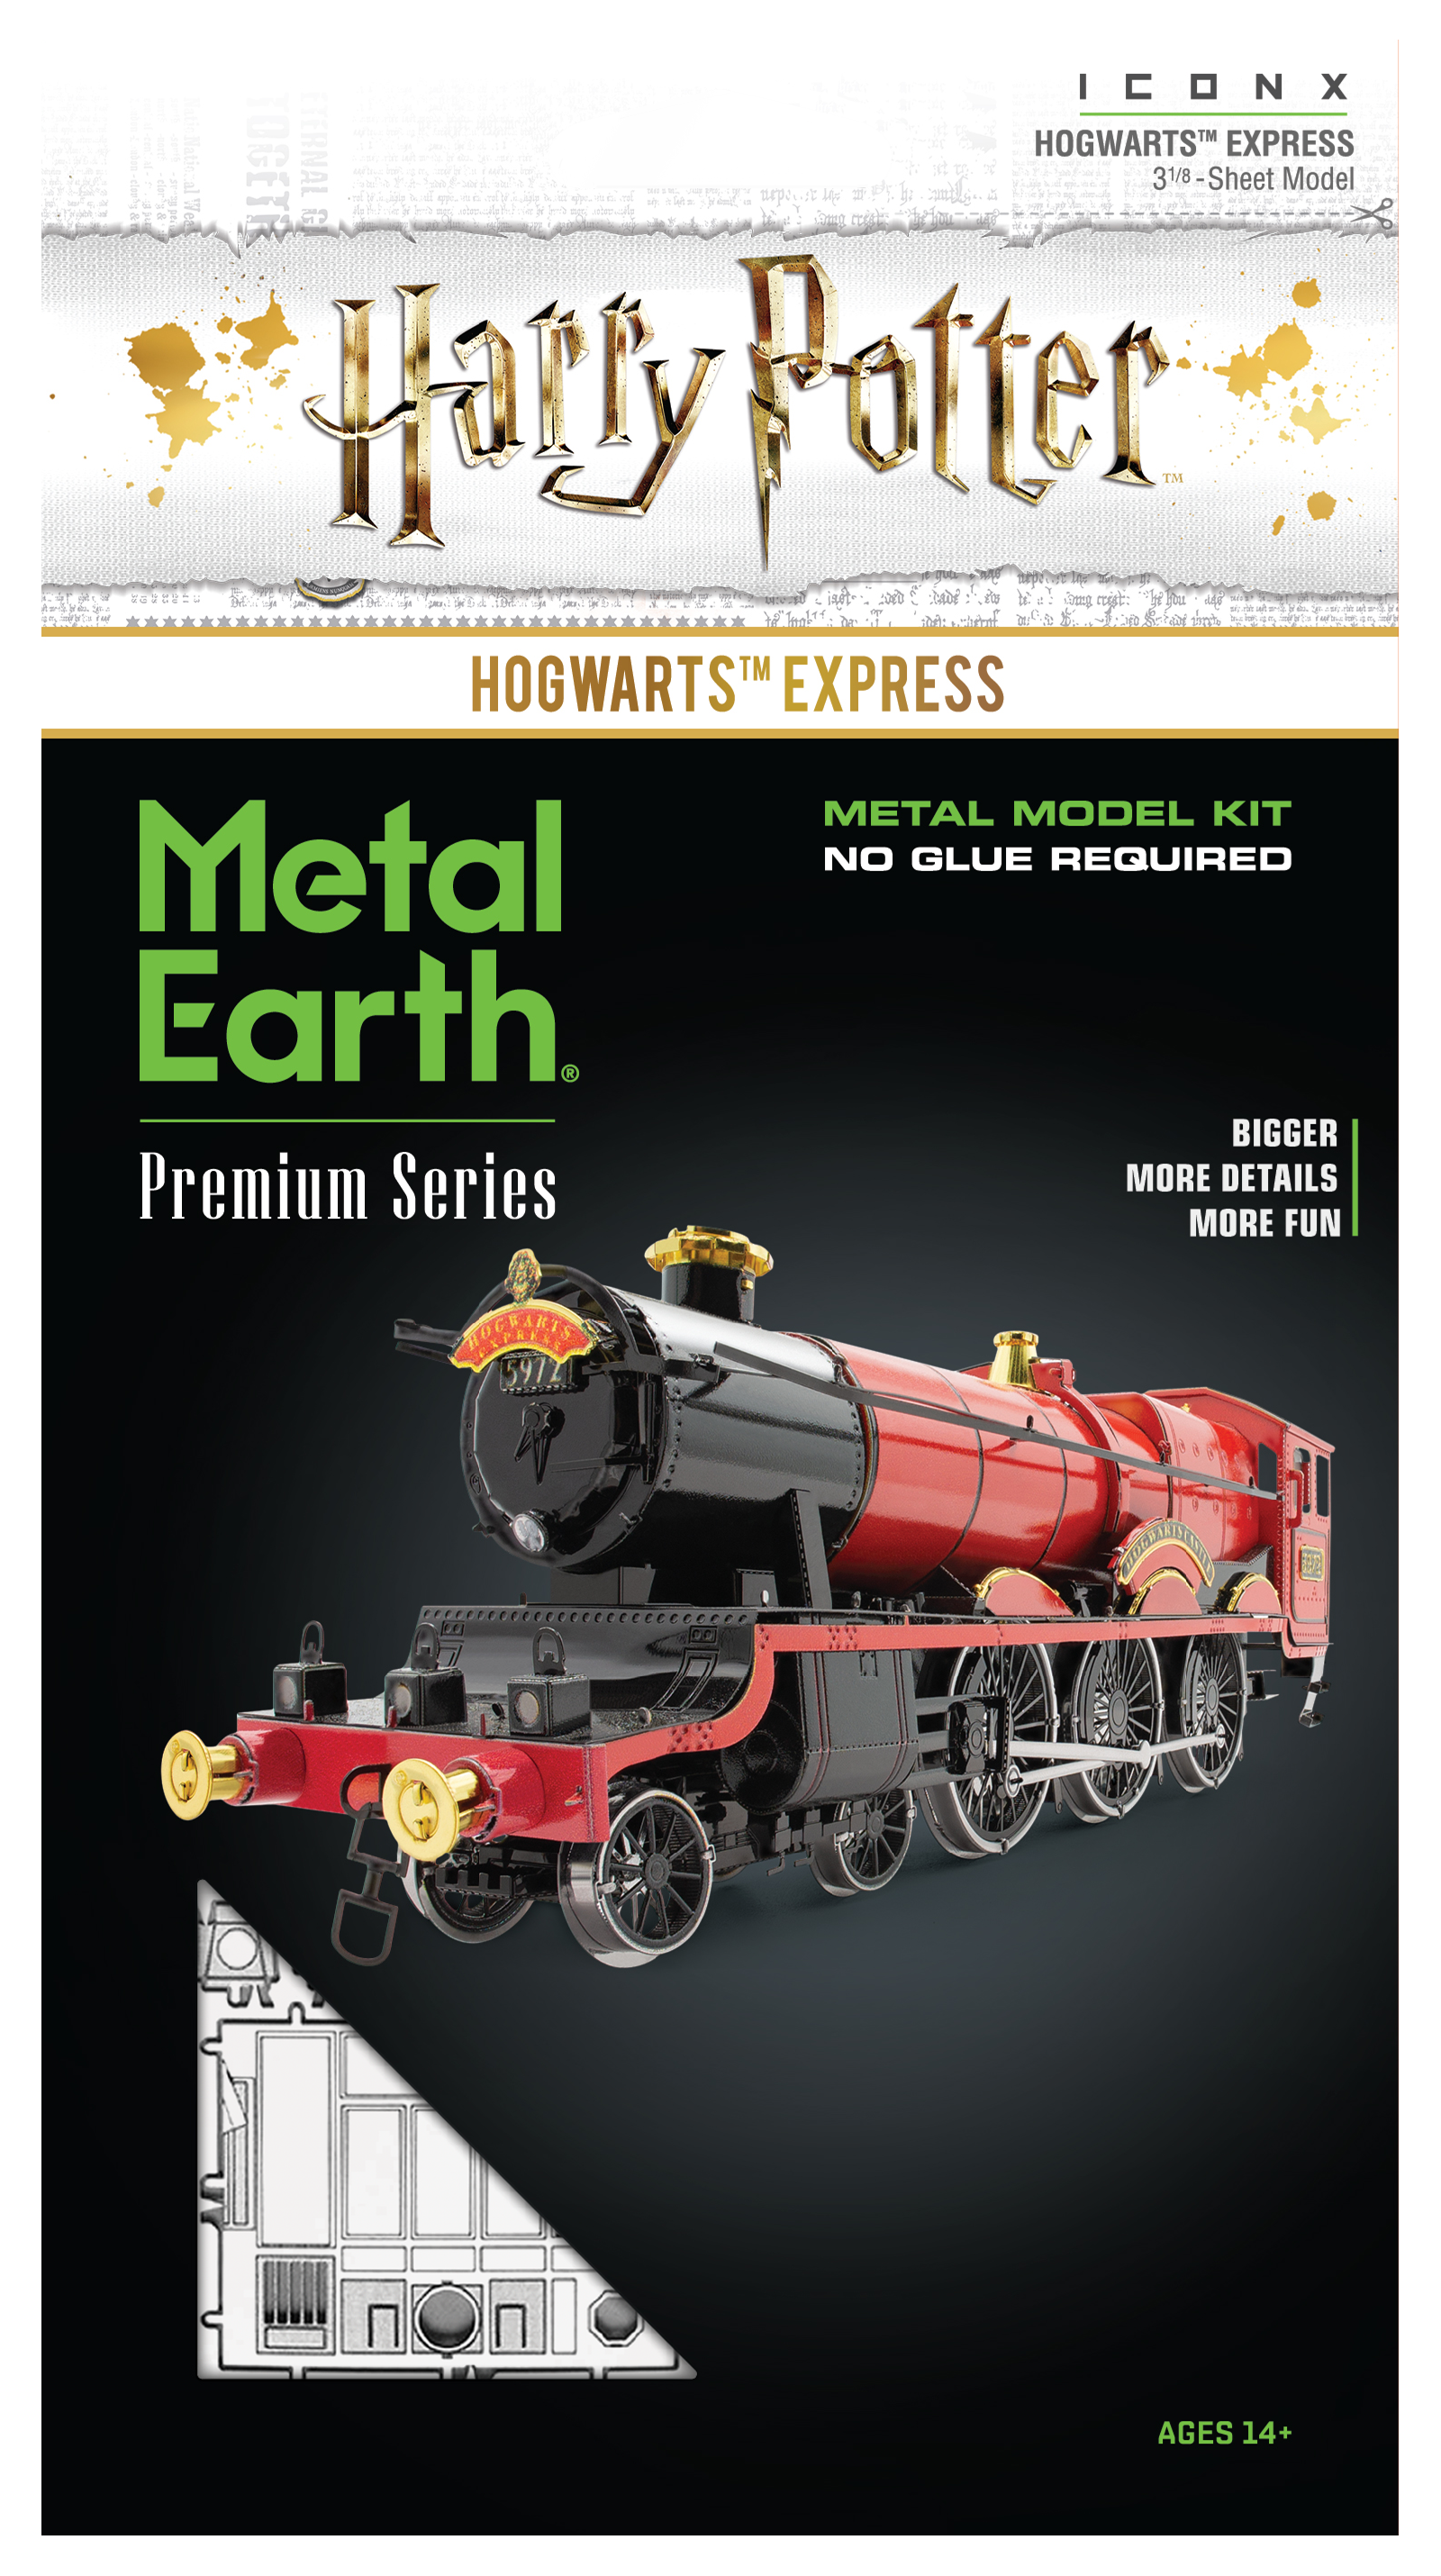 Metal Earth Iconx - Hogwarts Express    